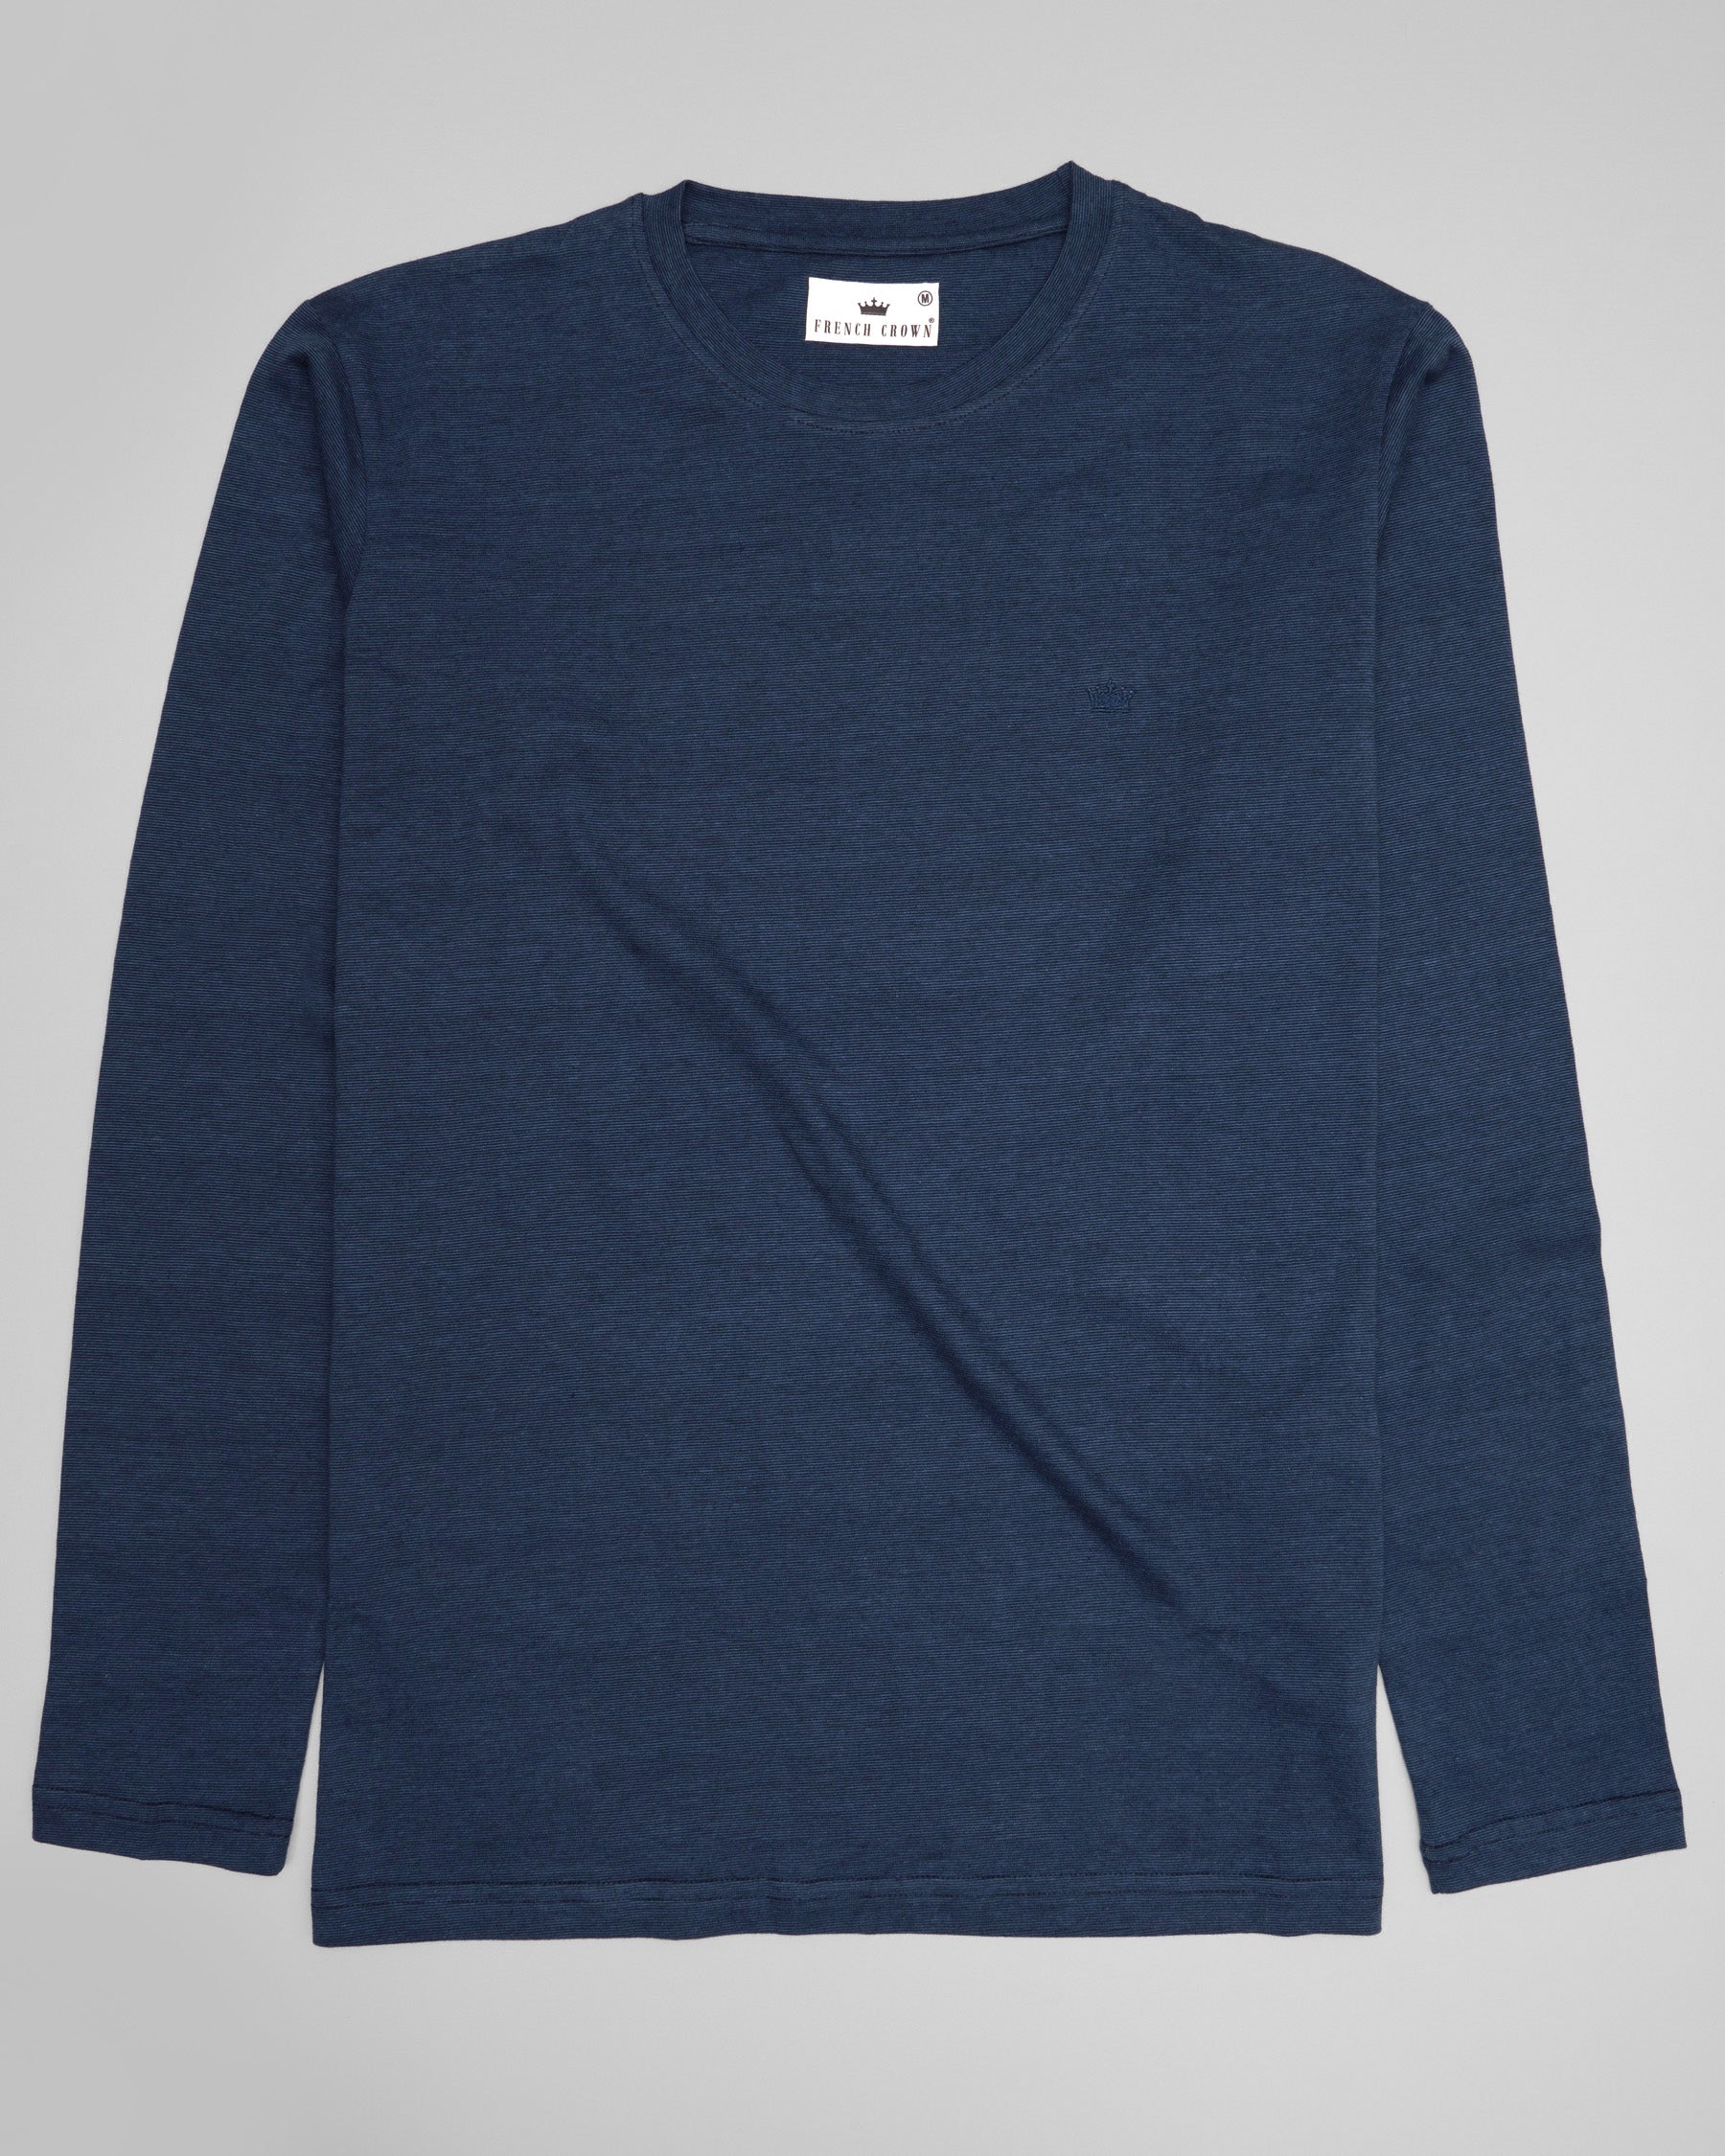 Royal Blue Pinstriped Full-Sleeve Super soft Premium Cotton Jersey T-shirt